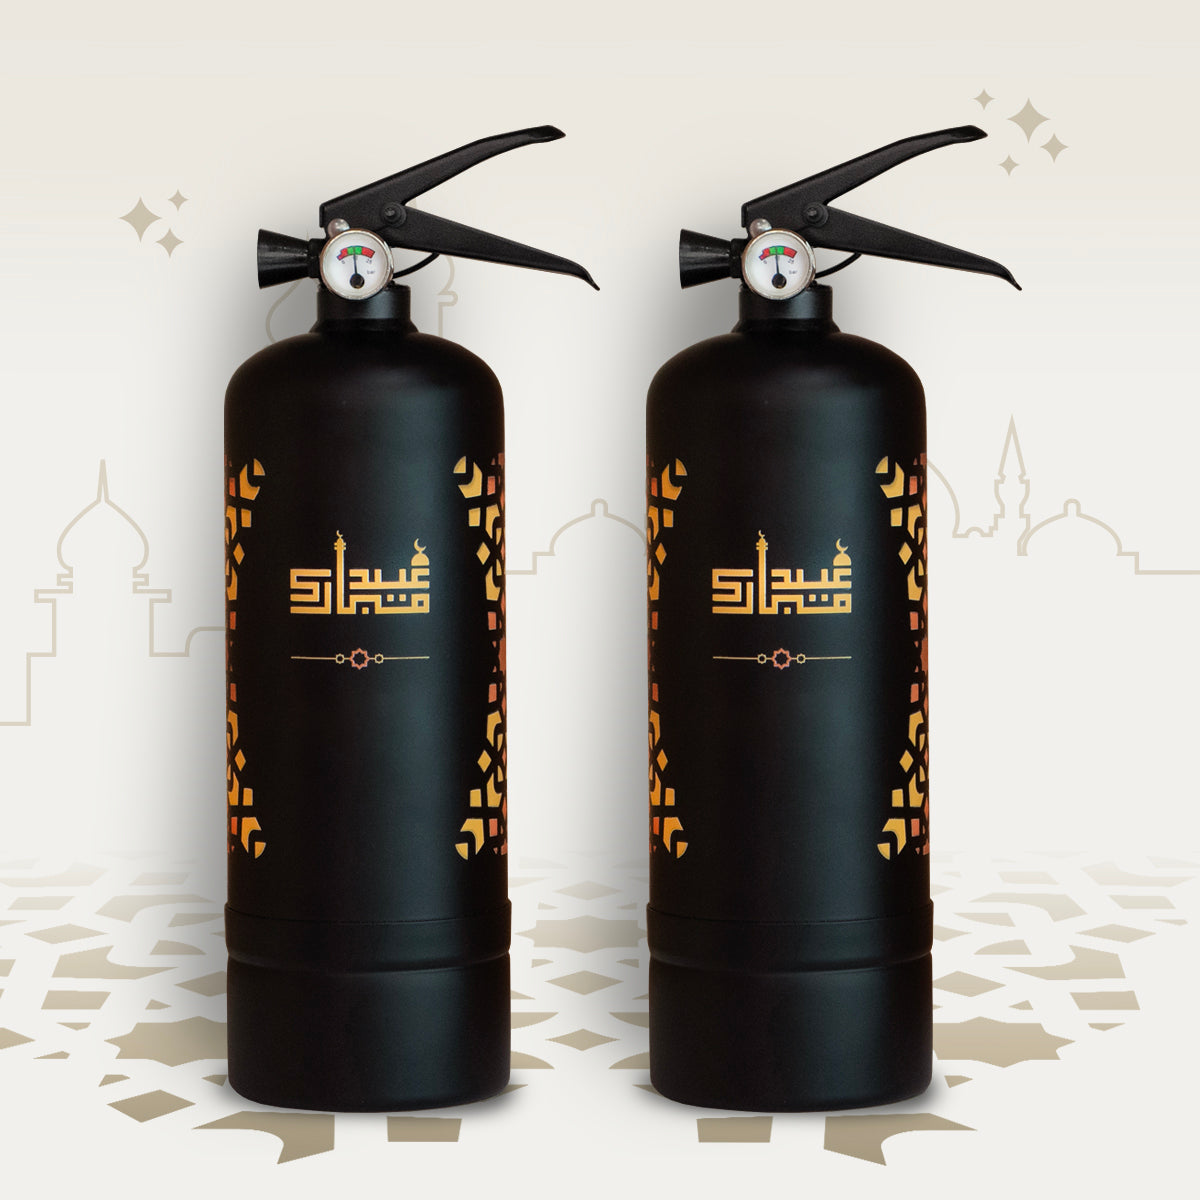 1kg Lebaran Fire Extinguisher (Edisi Raya) - Pack of 2